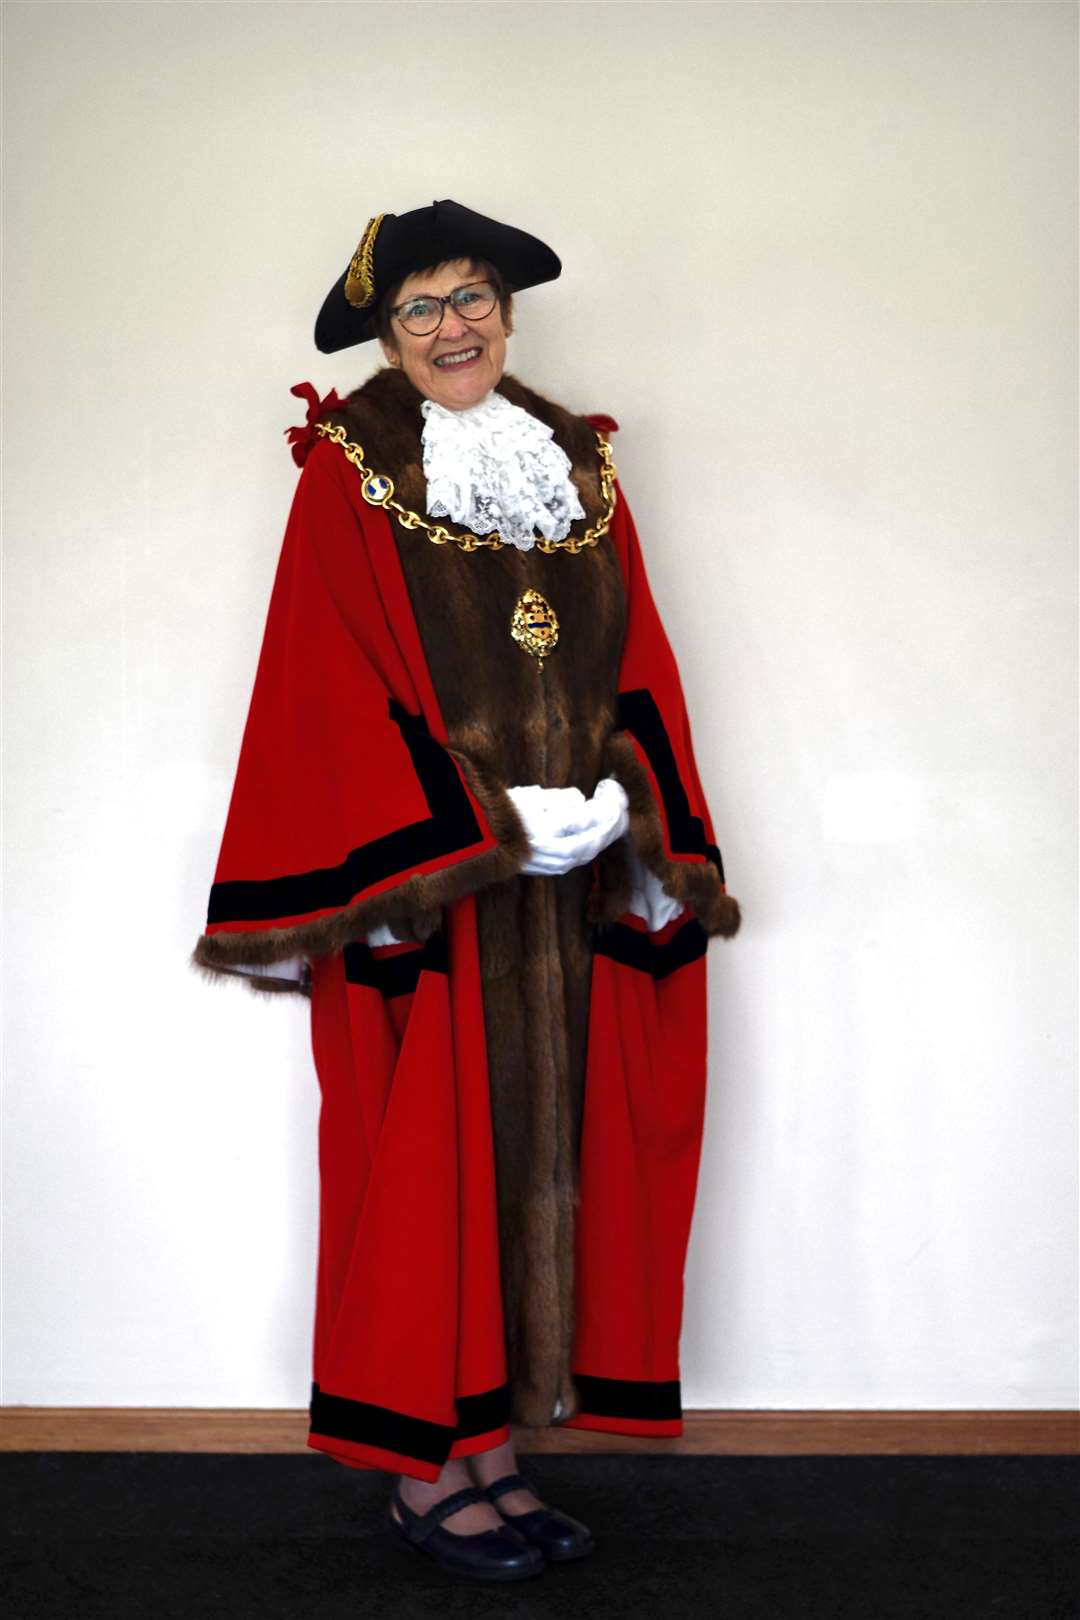 The new Mayor of Maidstone, Cllr Fay Gooch